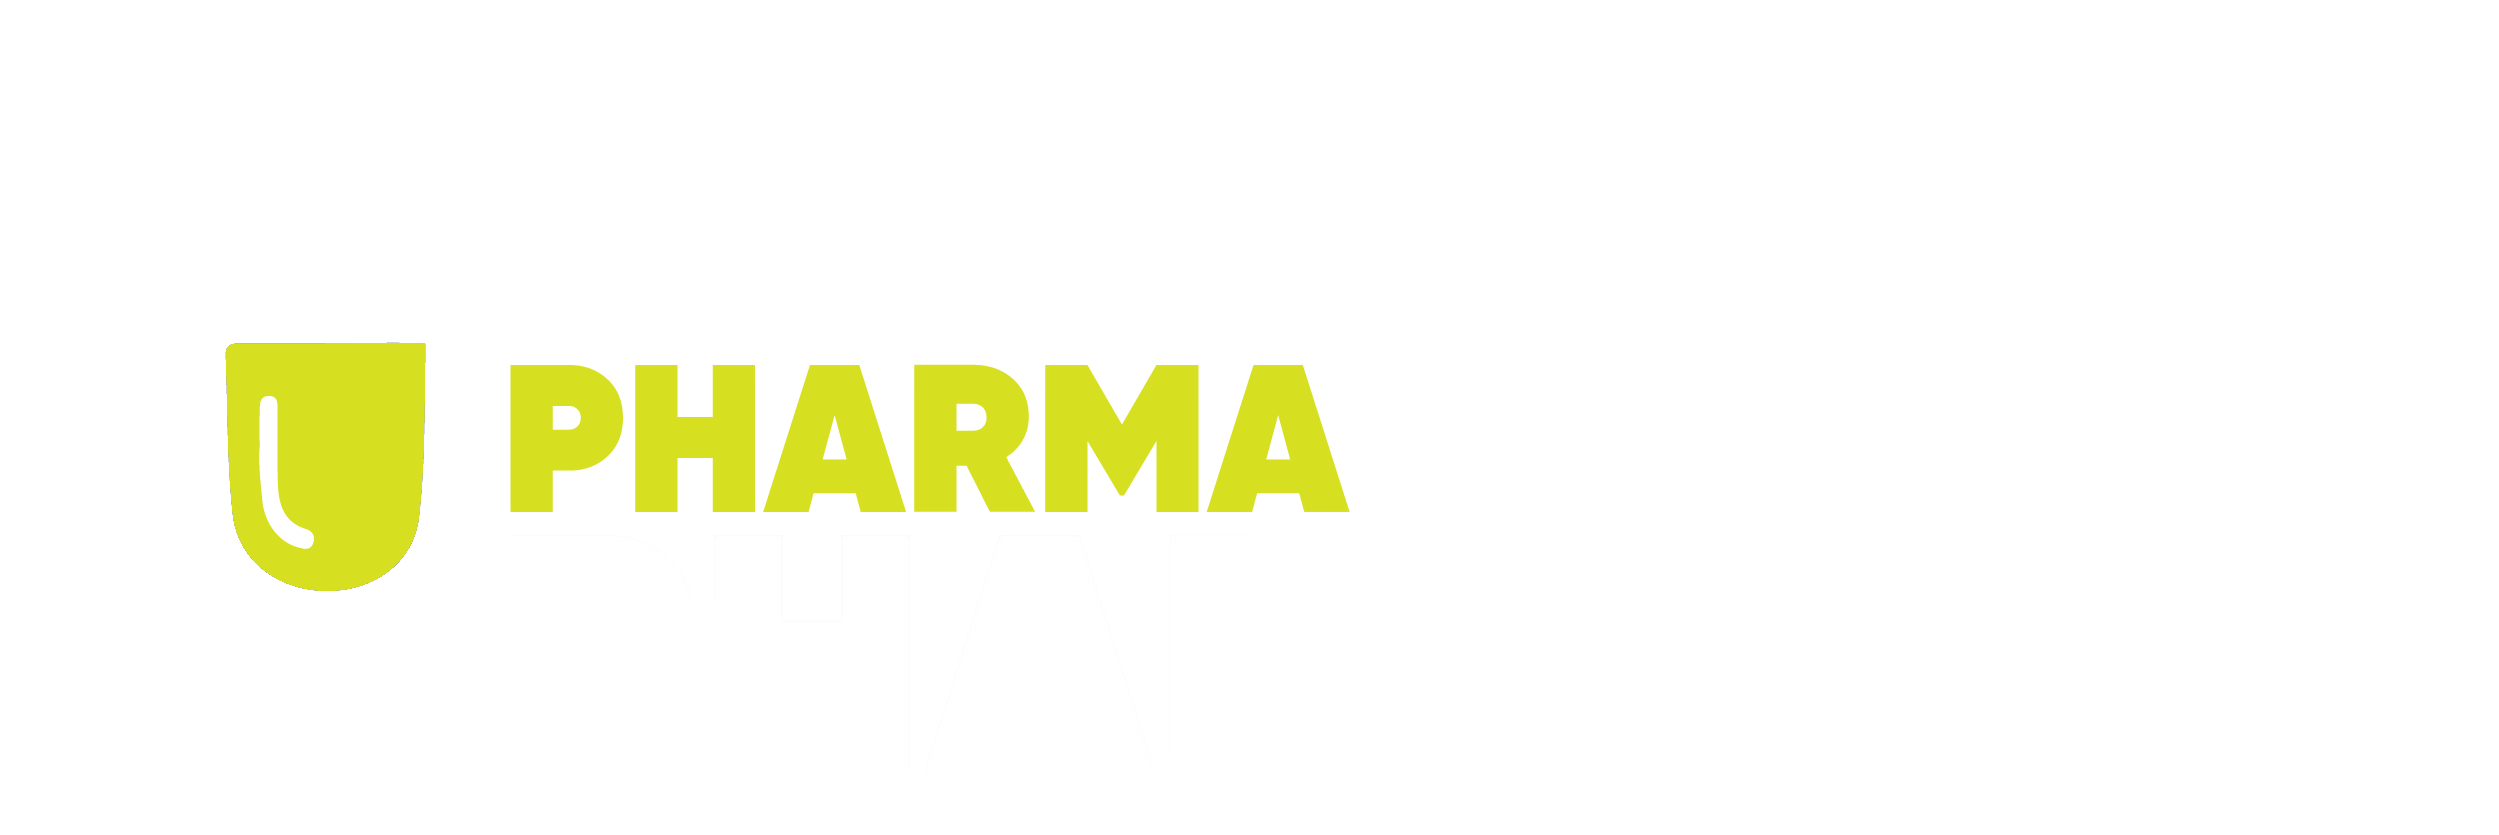 Pharmaviva Pharmacy